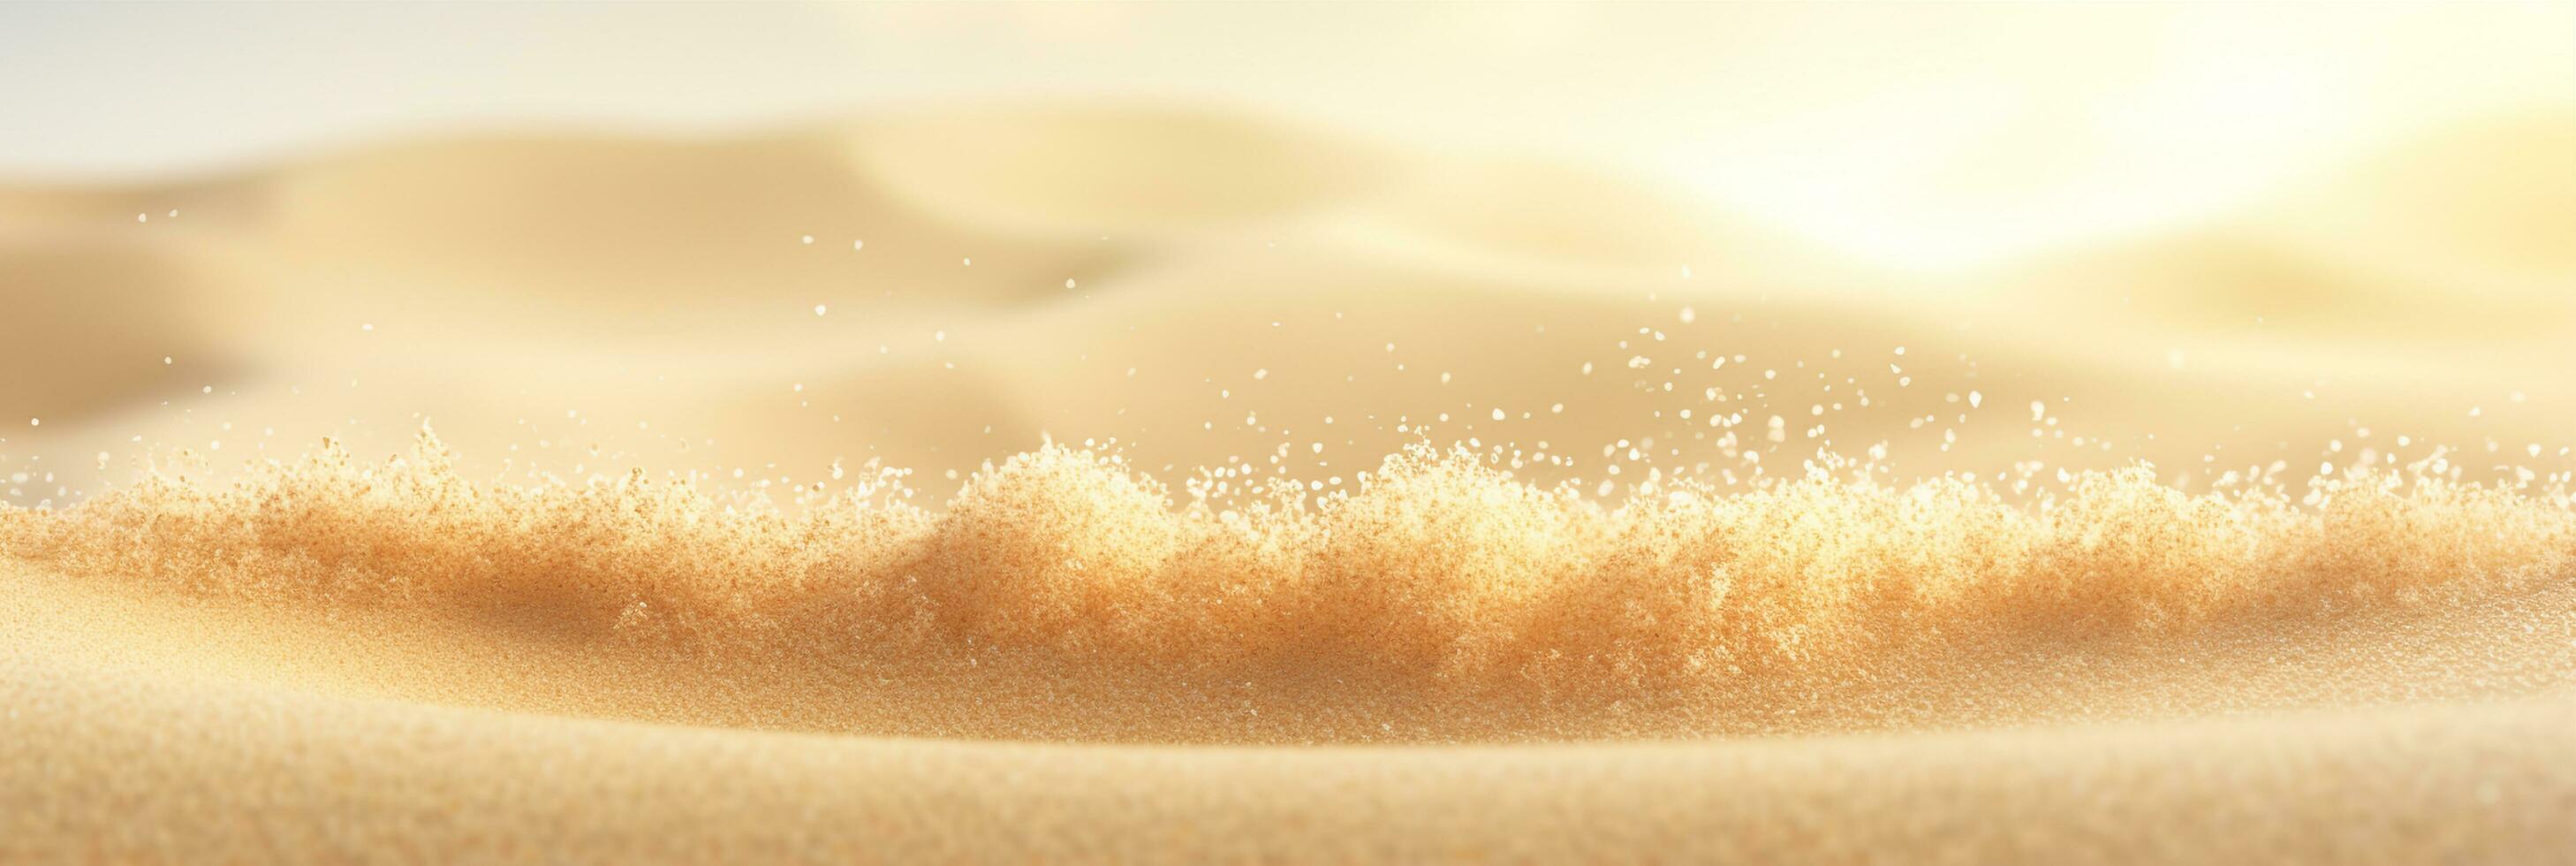 areias fundo areia fundo grão do areia fundo a deserto fundo ai gerado foto